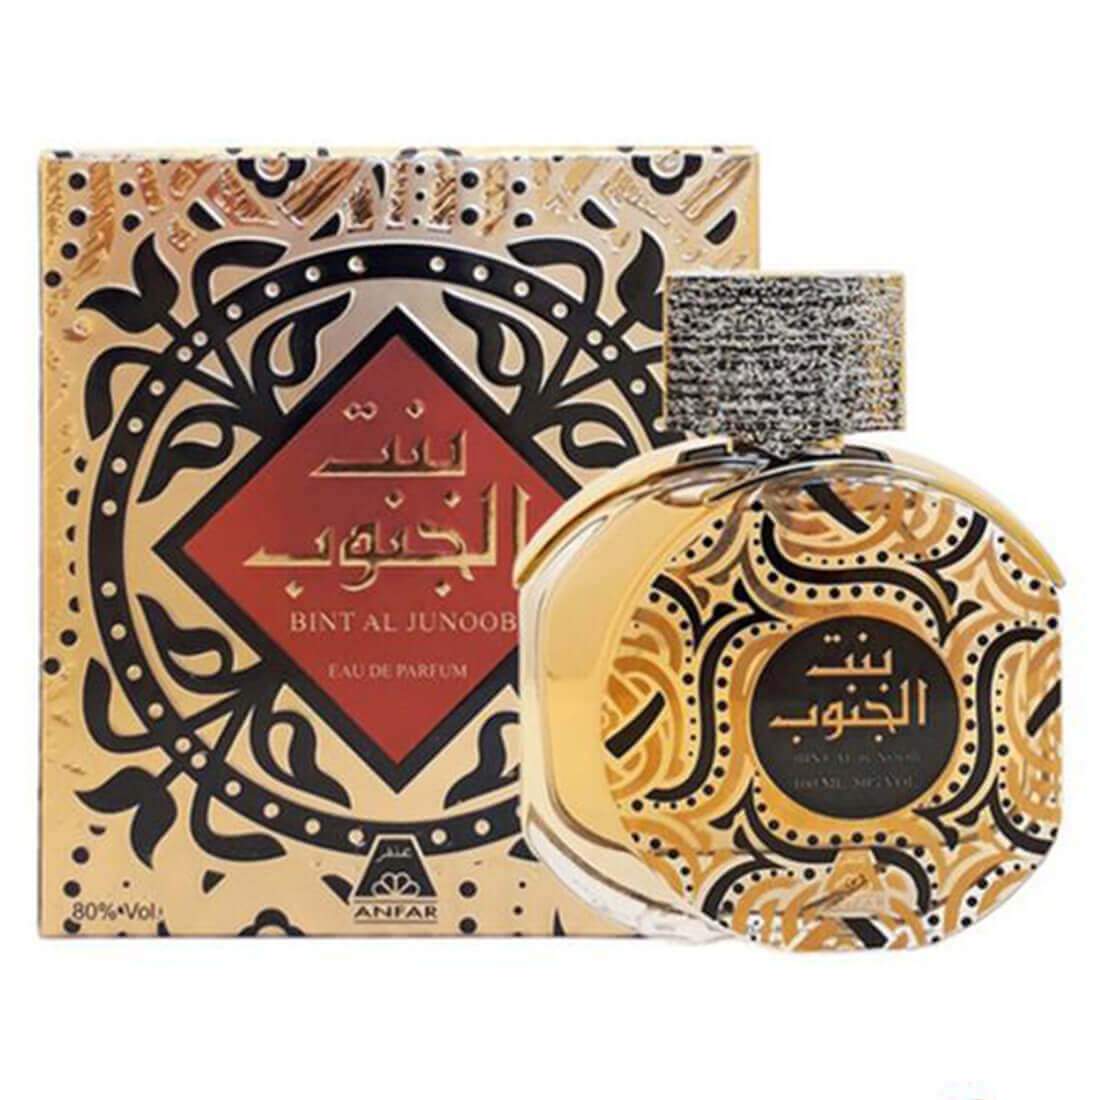 Anfar Bint Al Junoob Oud Perfume Spray 